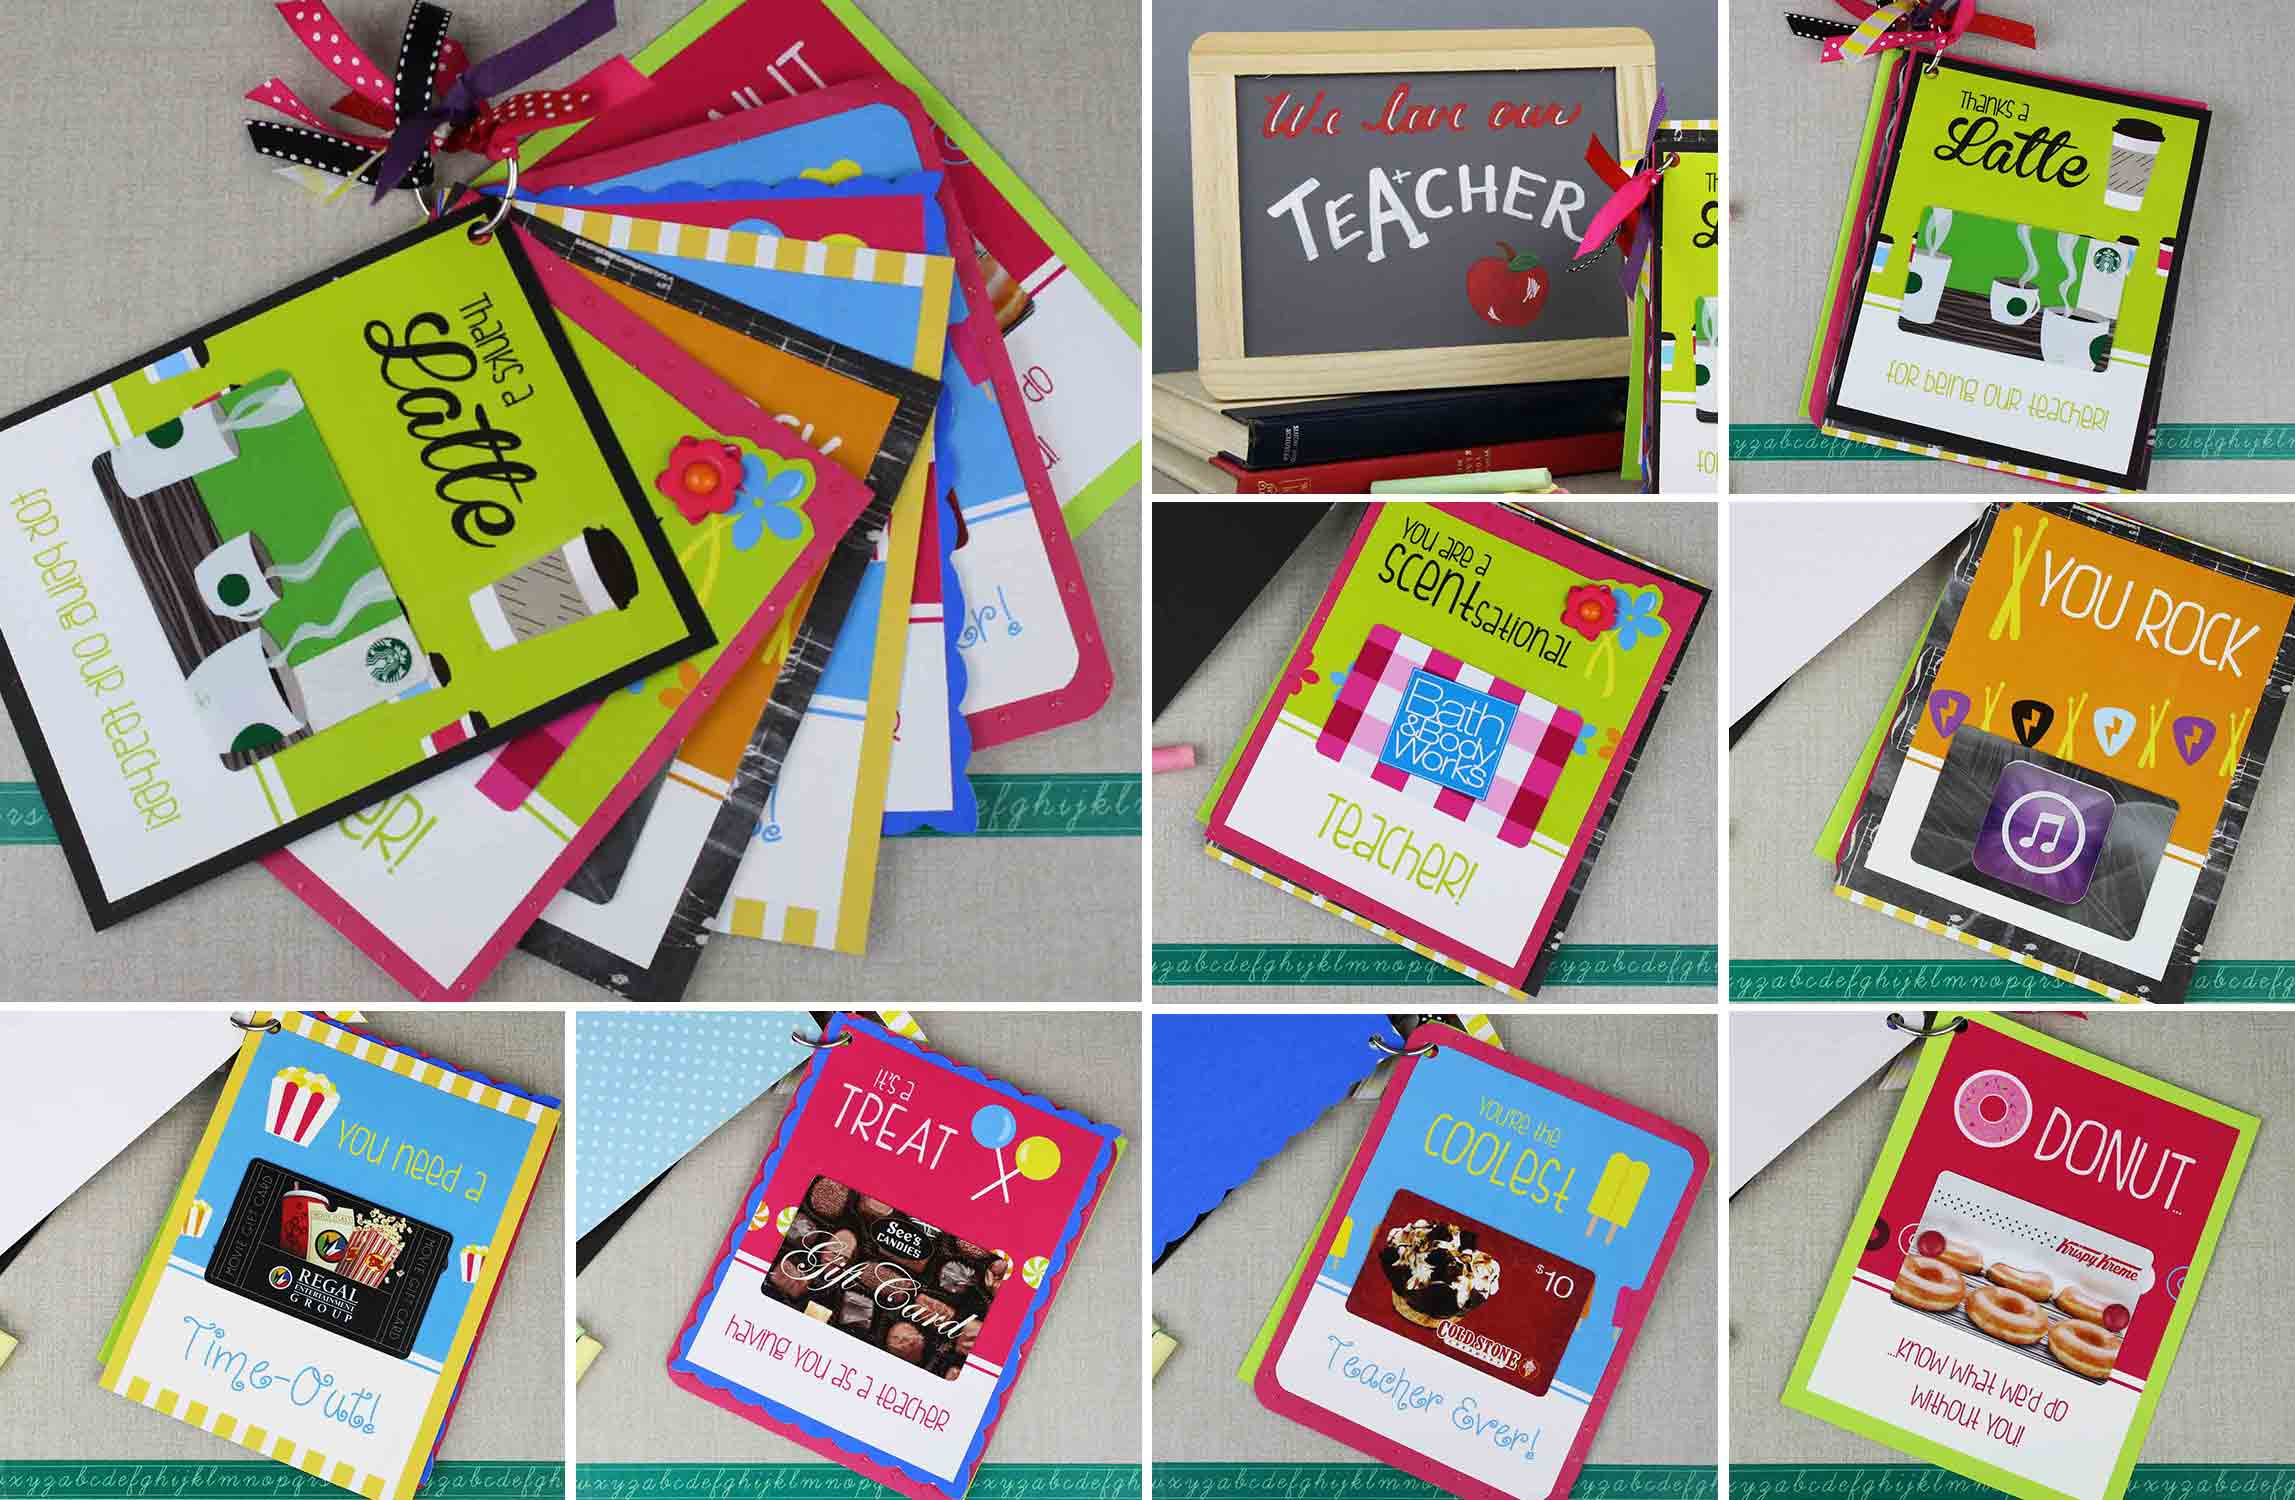 Thank You Gift Card Ideas
 Most Popular Gift Ideas for Teacher Appreciation Week